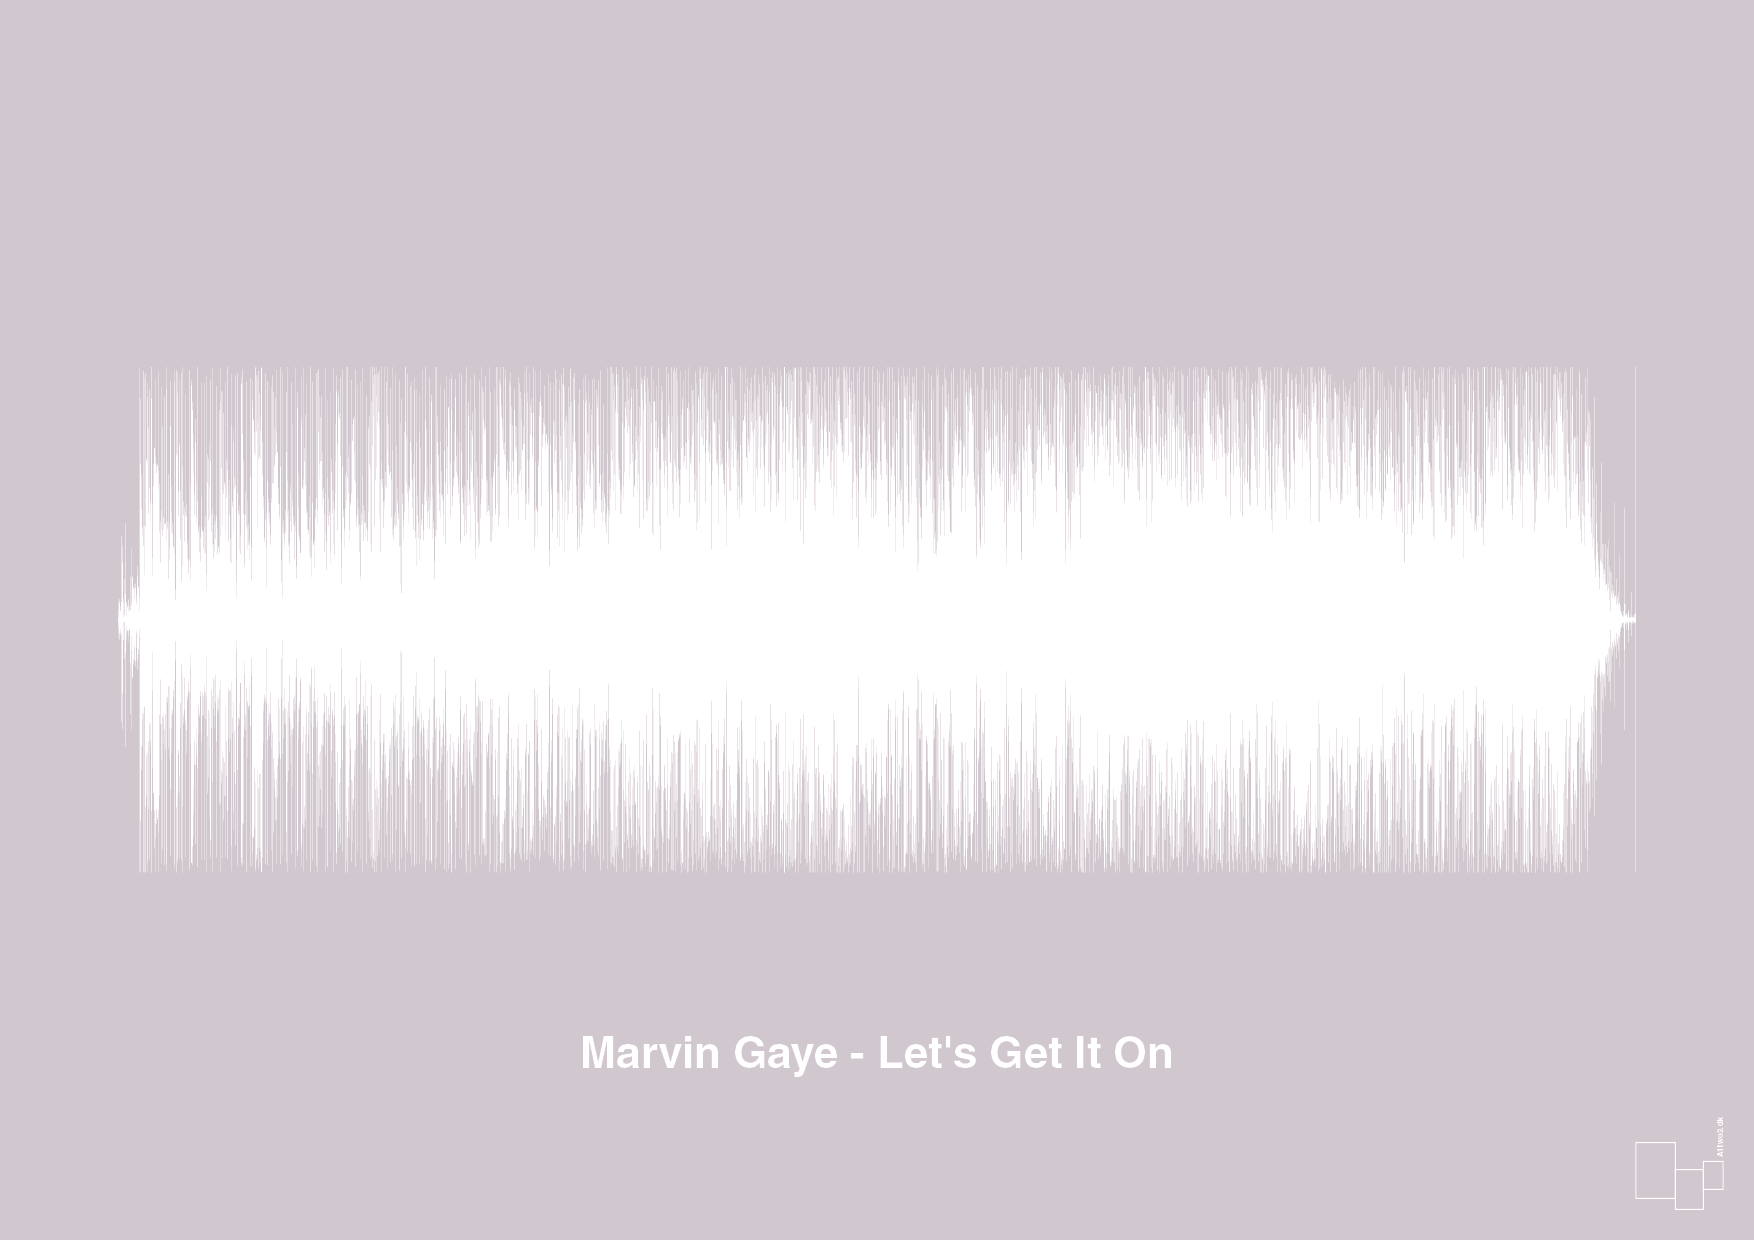 marvin gaye - let's get it on - Plakat med Musik i Dusty Lilac